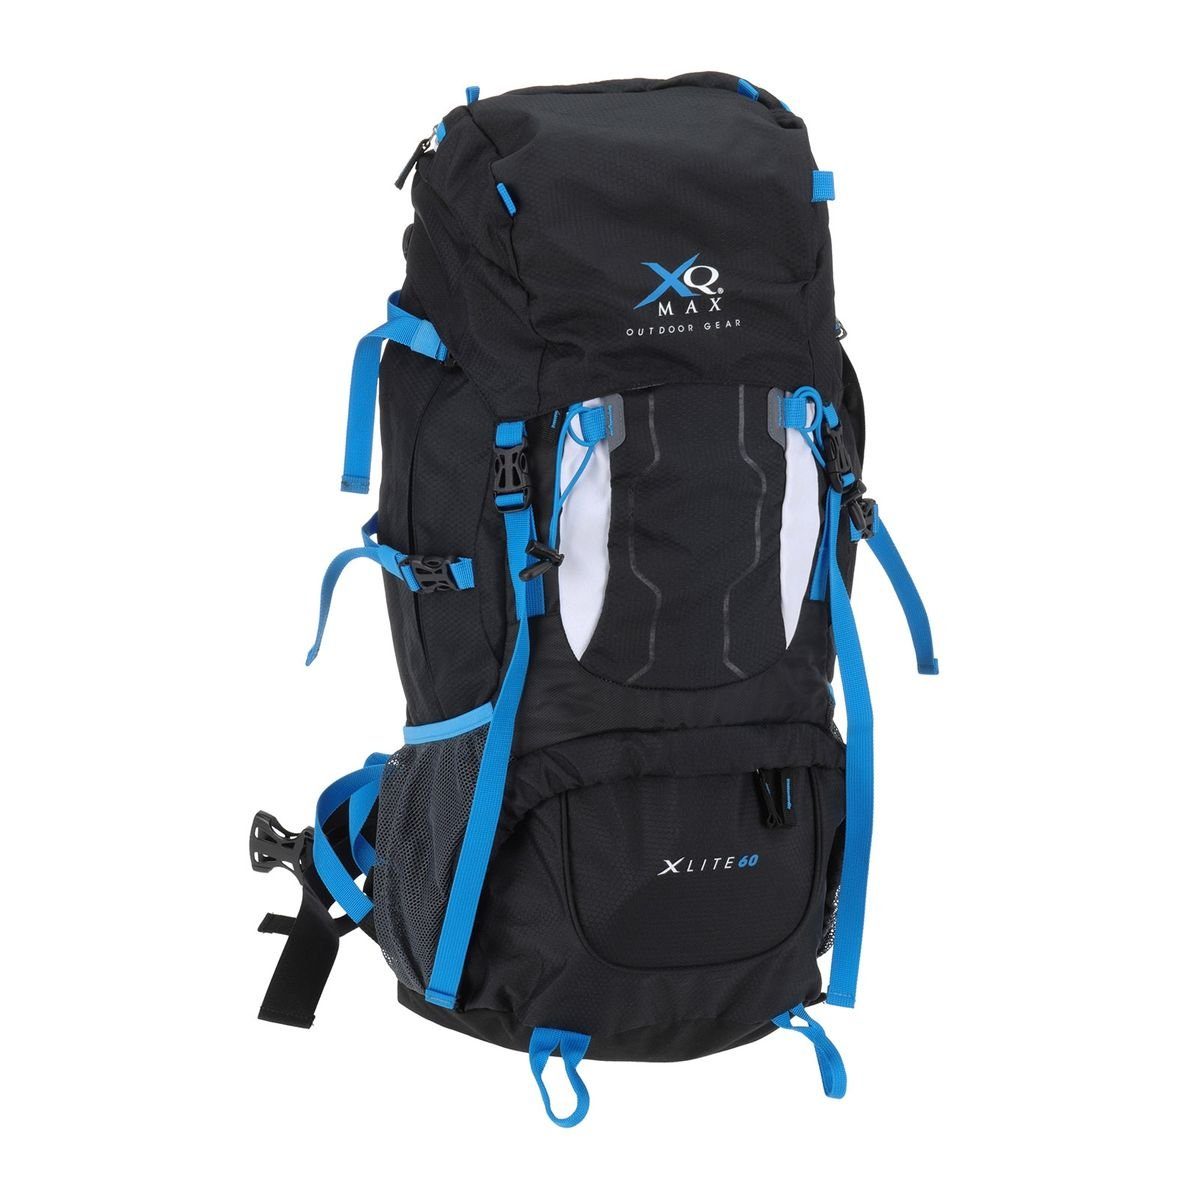 Rückensystem Wandern Trekkingrucksack Wanderrucksack Rucksack, 60L Wanderrucksack XQMAX blau mit verstellbarem